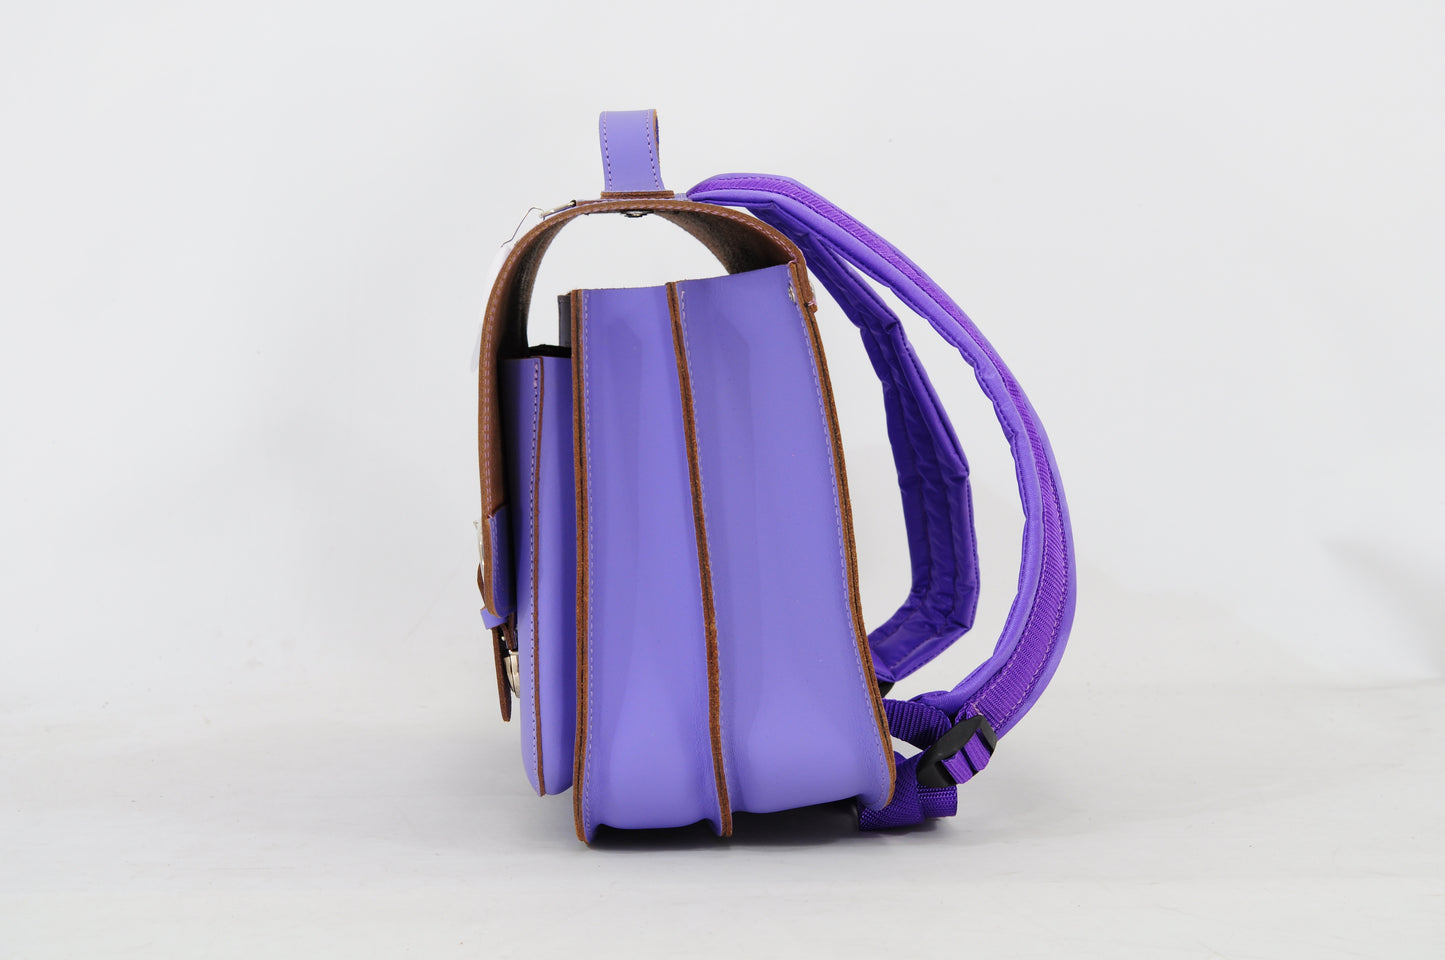 Own Stuff Leather Bookbag Hearts - Lilac - Primary school